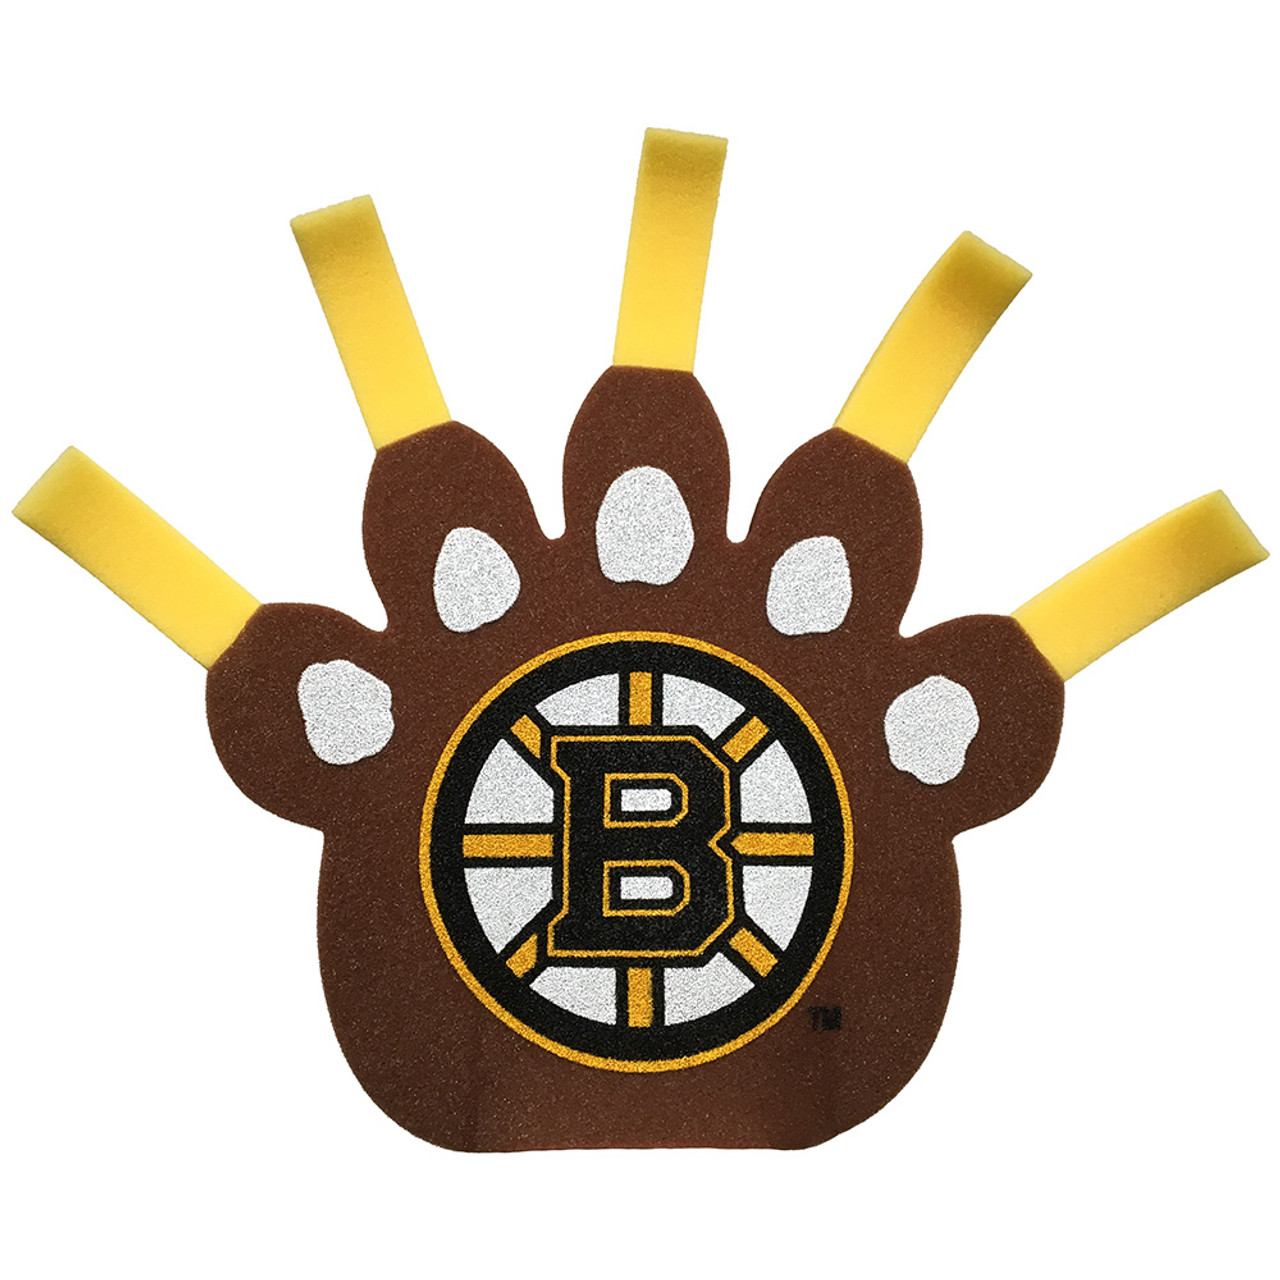 Boston Bruins Personalized 10'' Plush Bear - Black